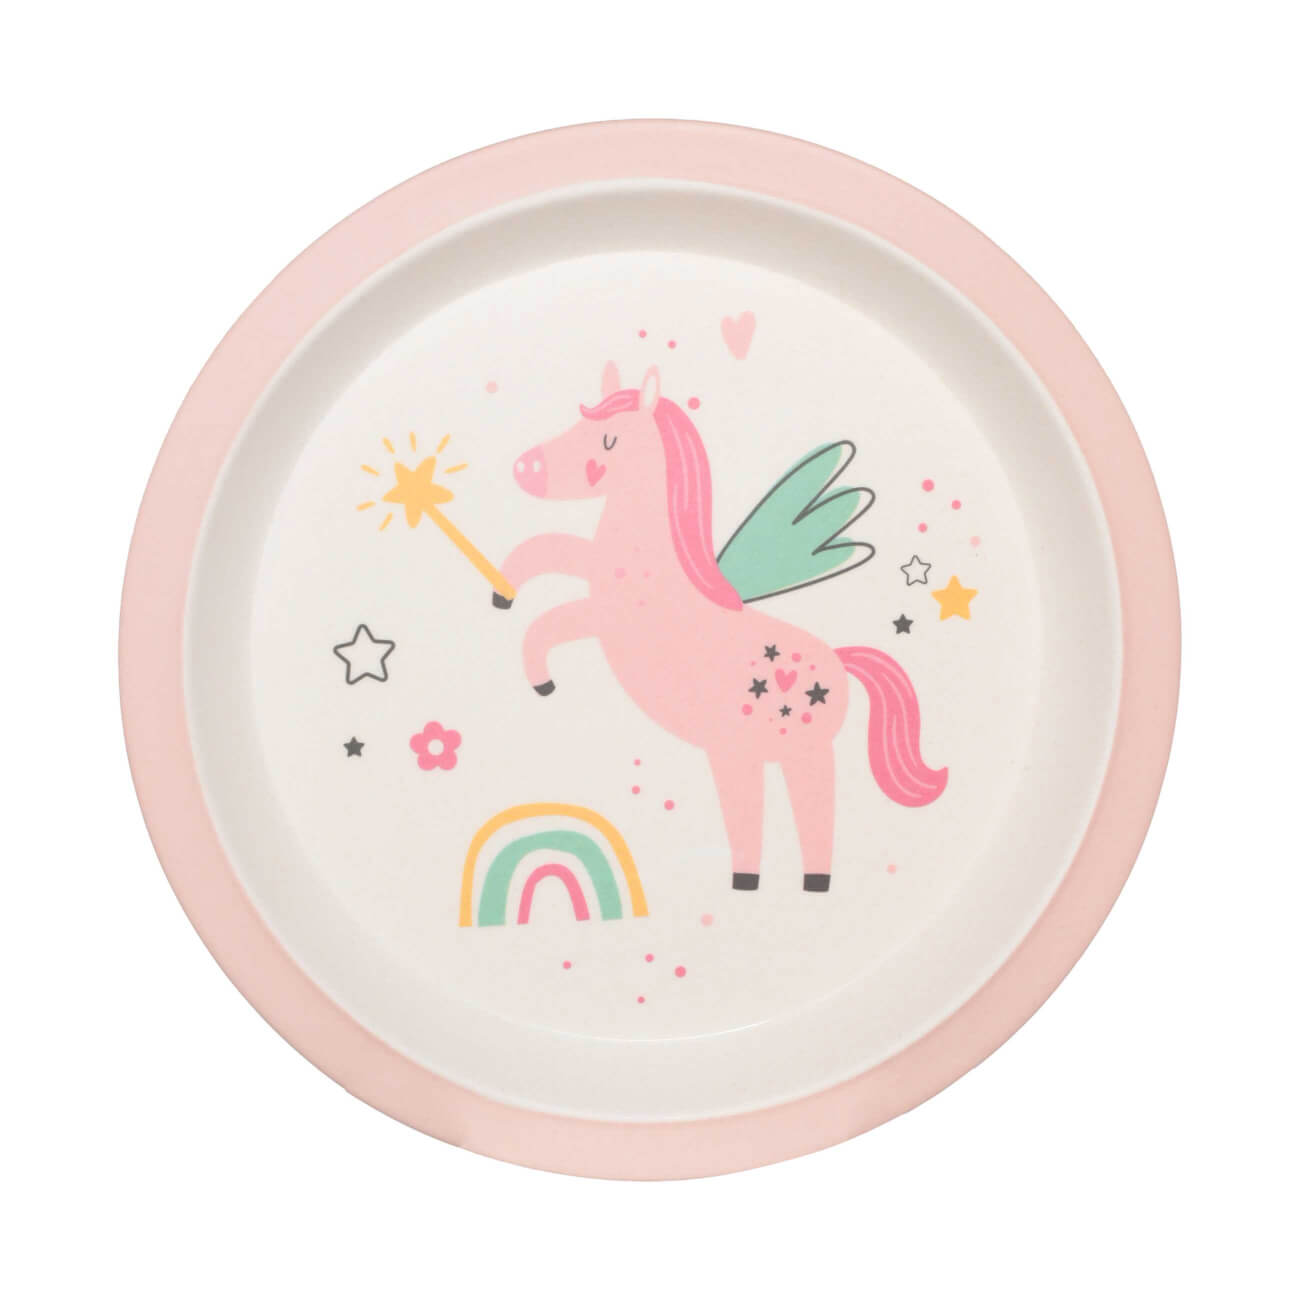 Тарелка закусочная, детская, 21 см, бамбук, розовая, Единорог и радуга, Unicorn тарелка суповая детская 15 см бамбук розово мятная единорог и звезды unicorn